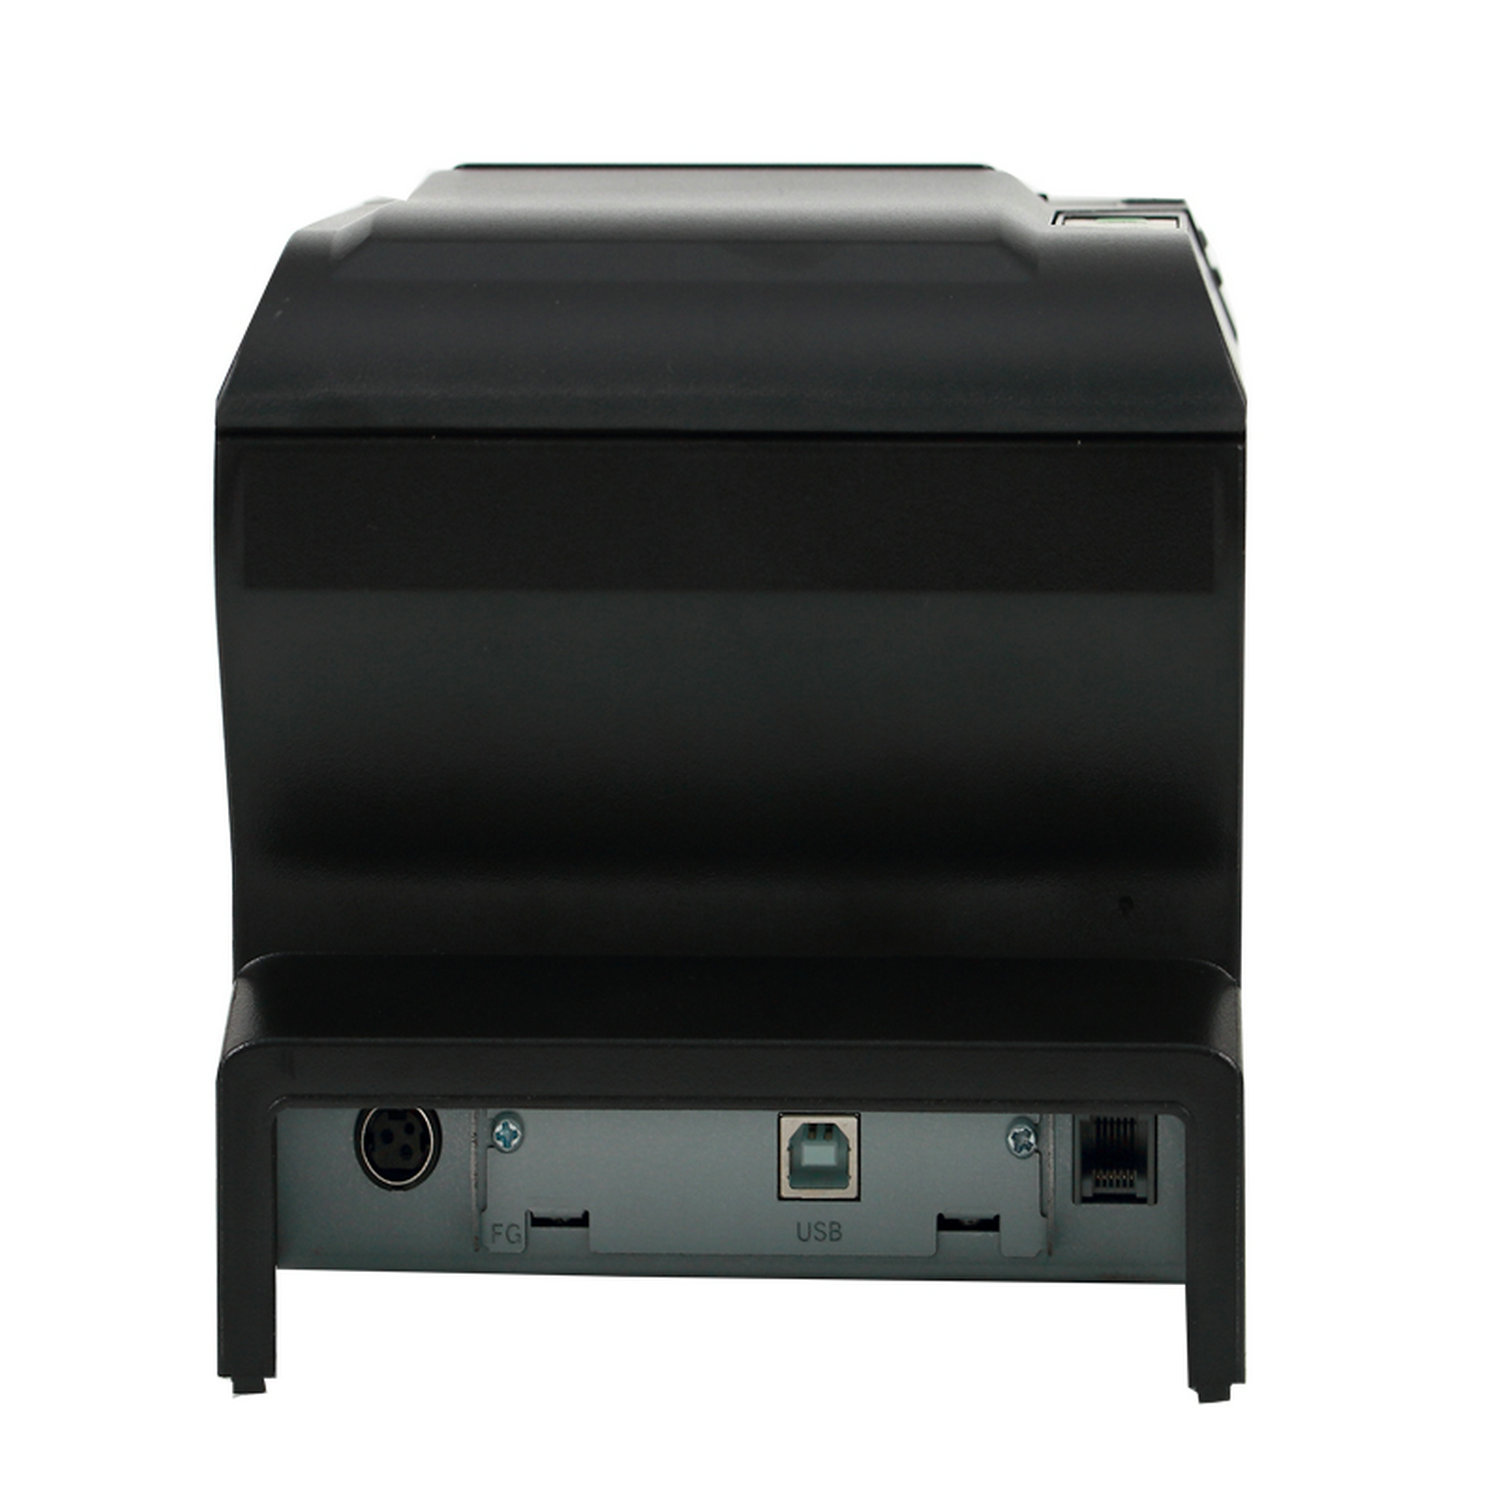 HCC-POS88V RS232/USB 80mm 高速二维条码打印热敏打印机 